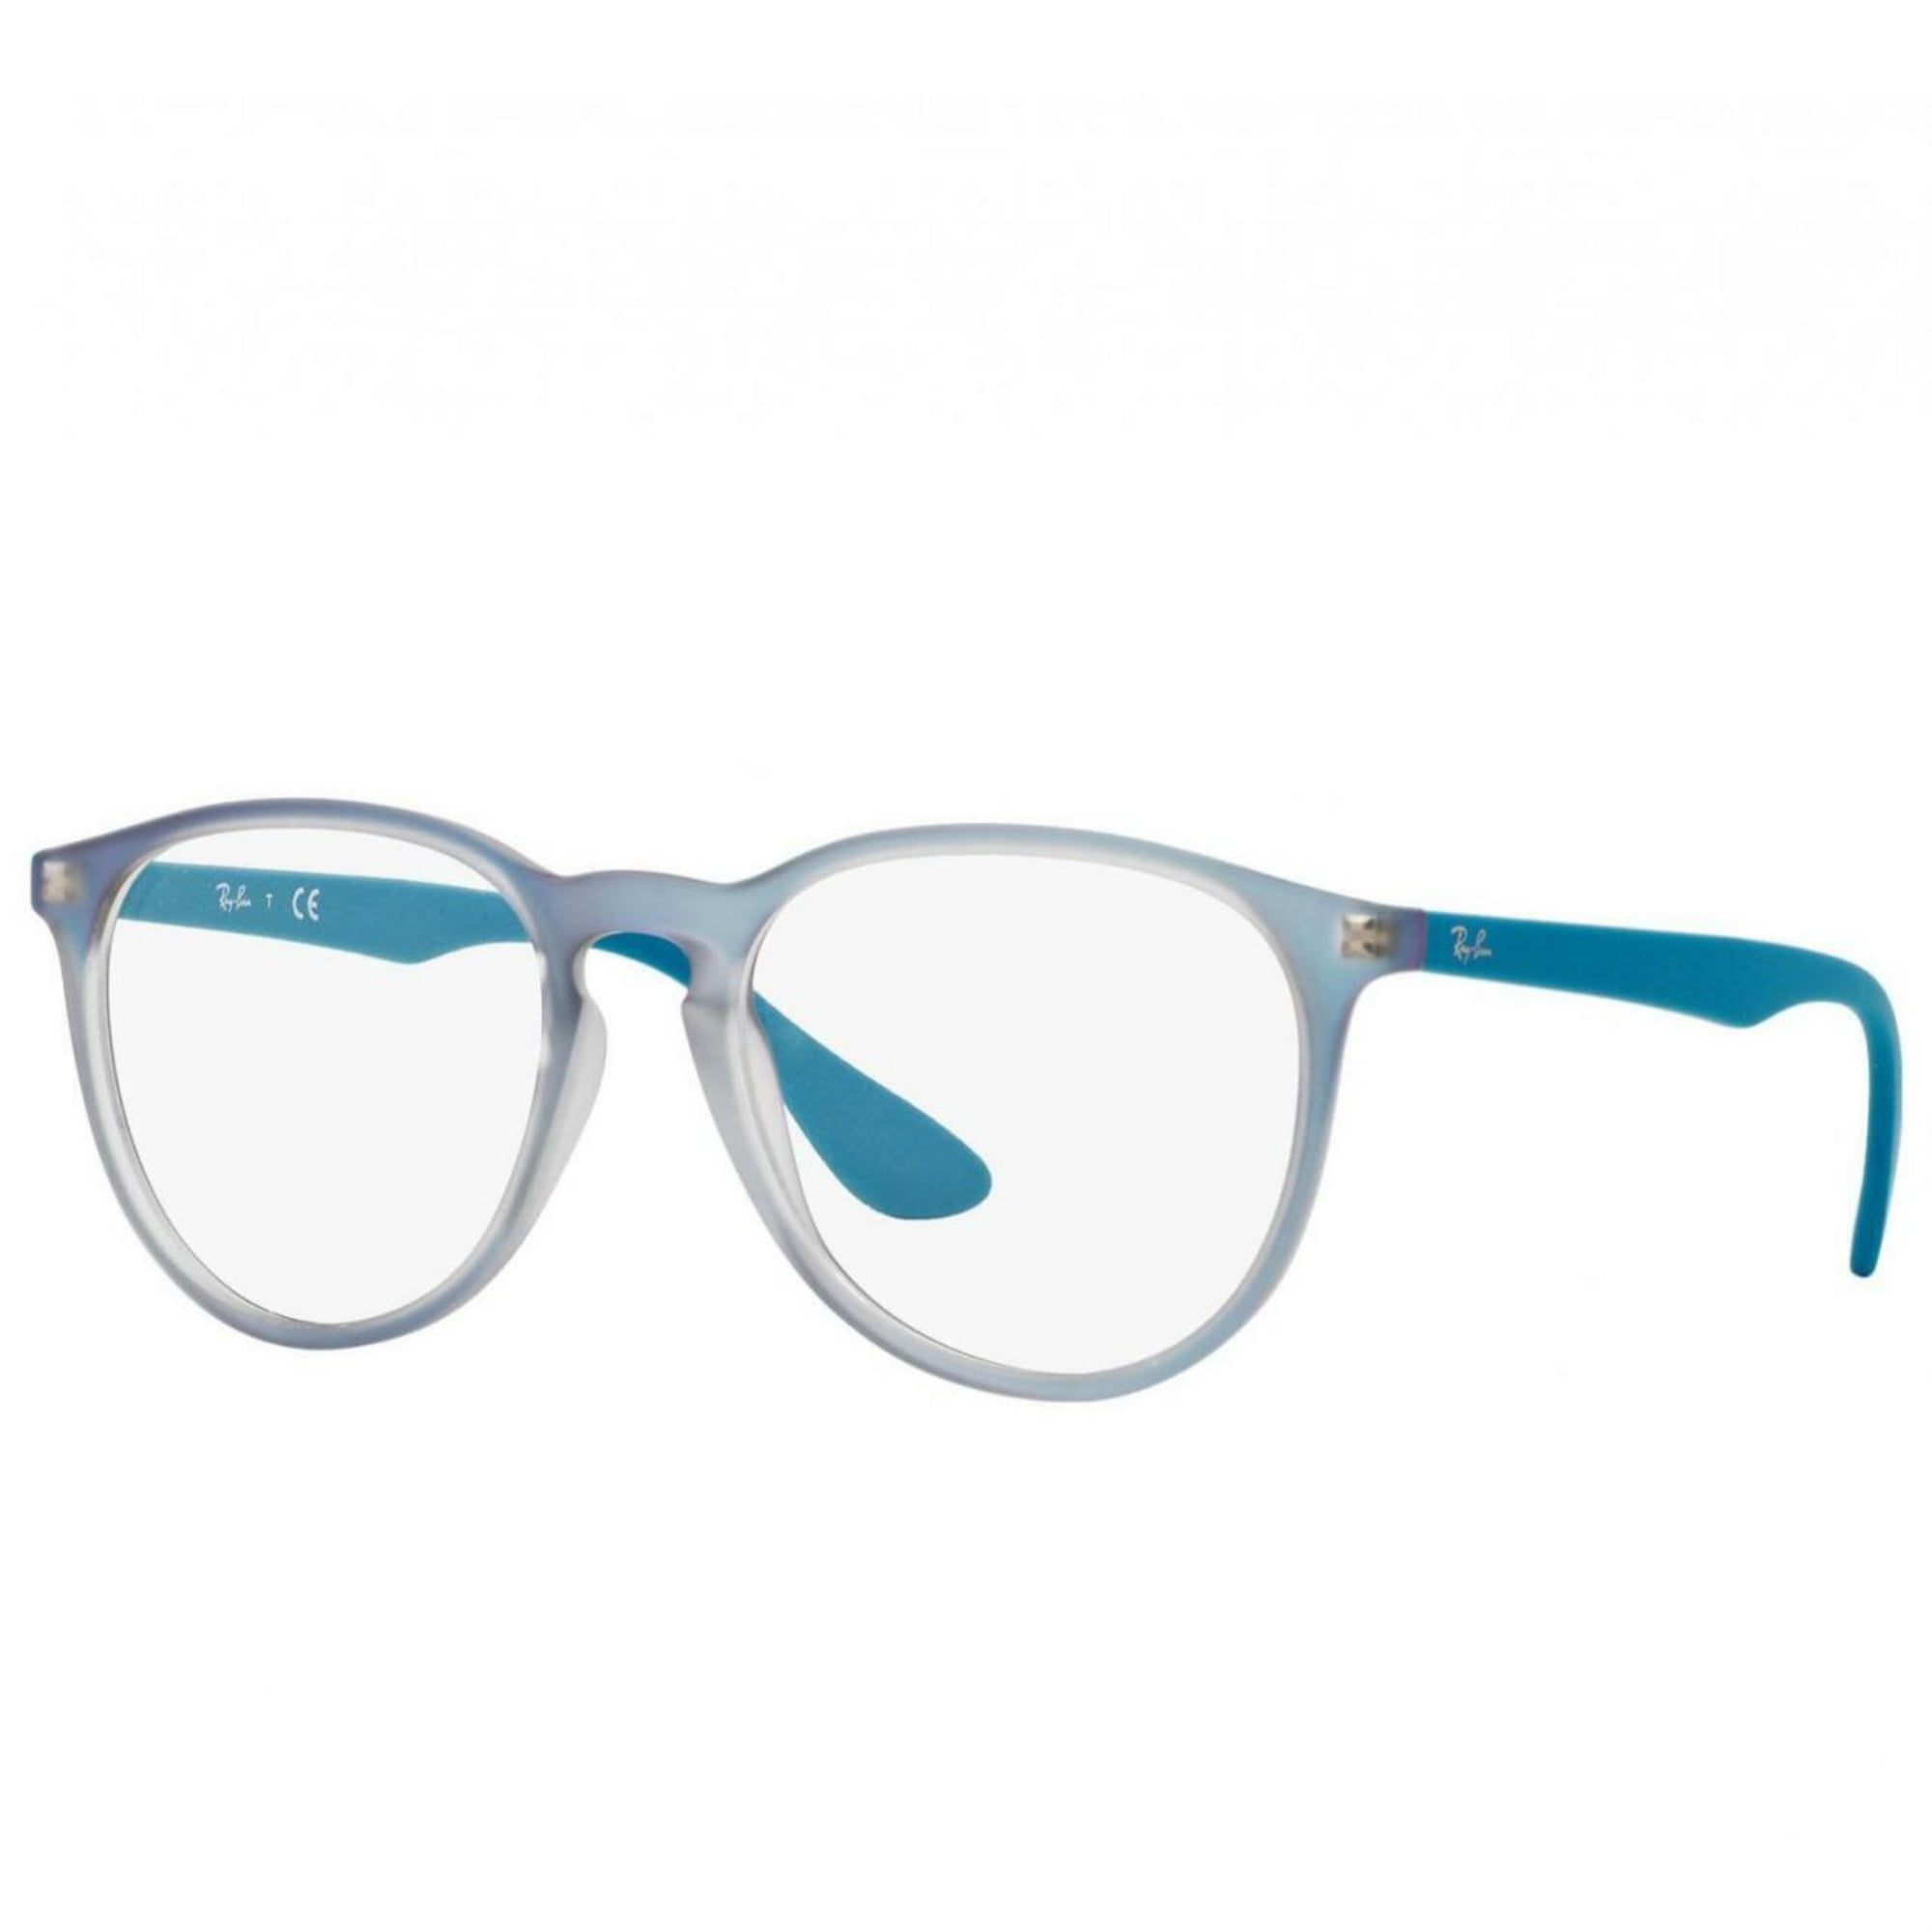 Ray Ban Rb7046 5484 Erika Optics Blue Iridescent Azure Round Eyeglasses Frames